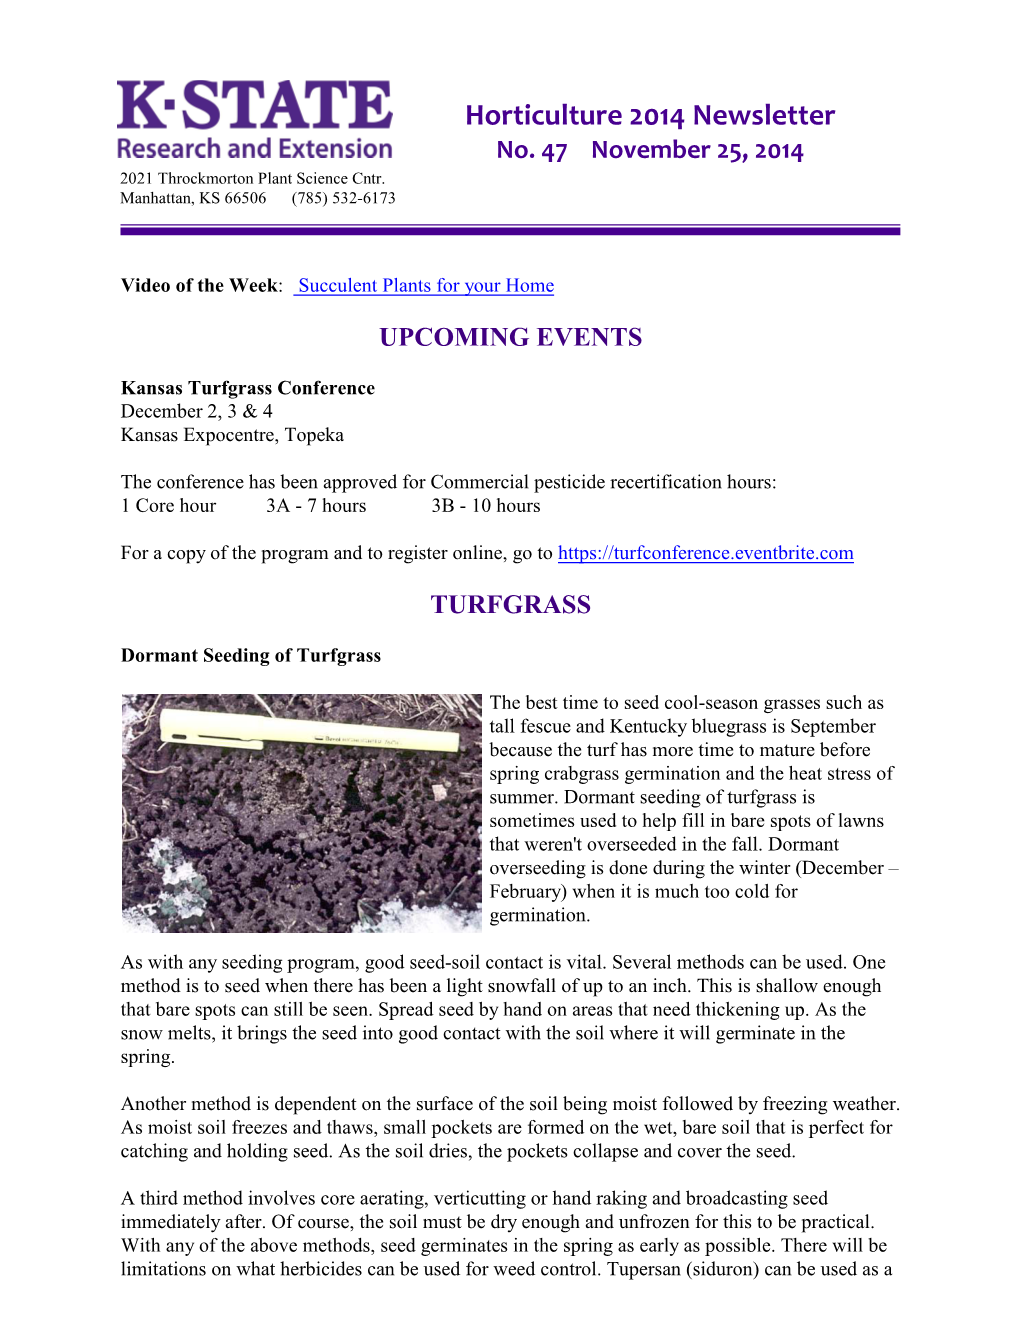 Horticulture 2014 Newsletter No